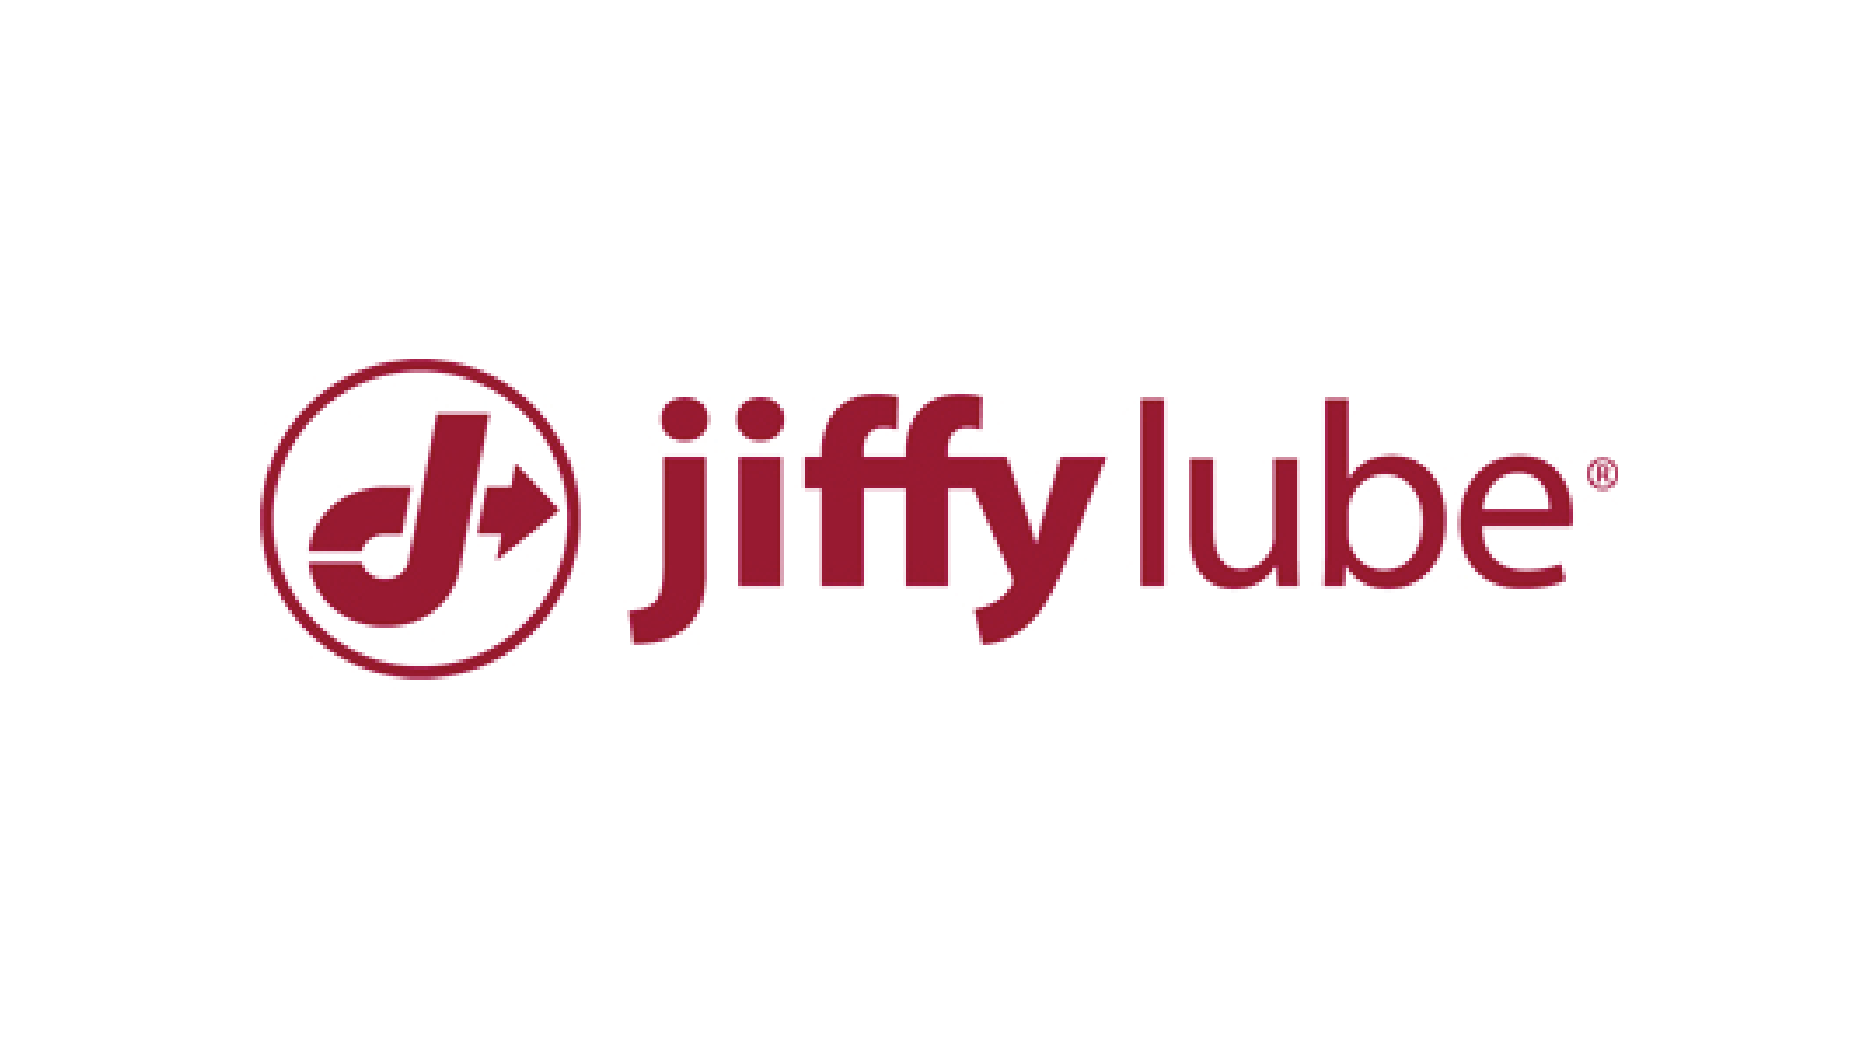 partner-logo_jiffy-lube.png